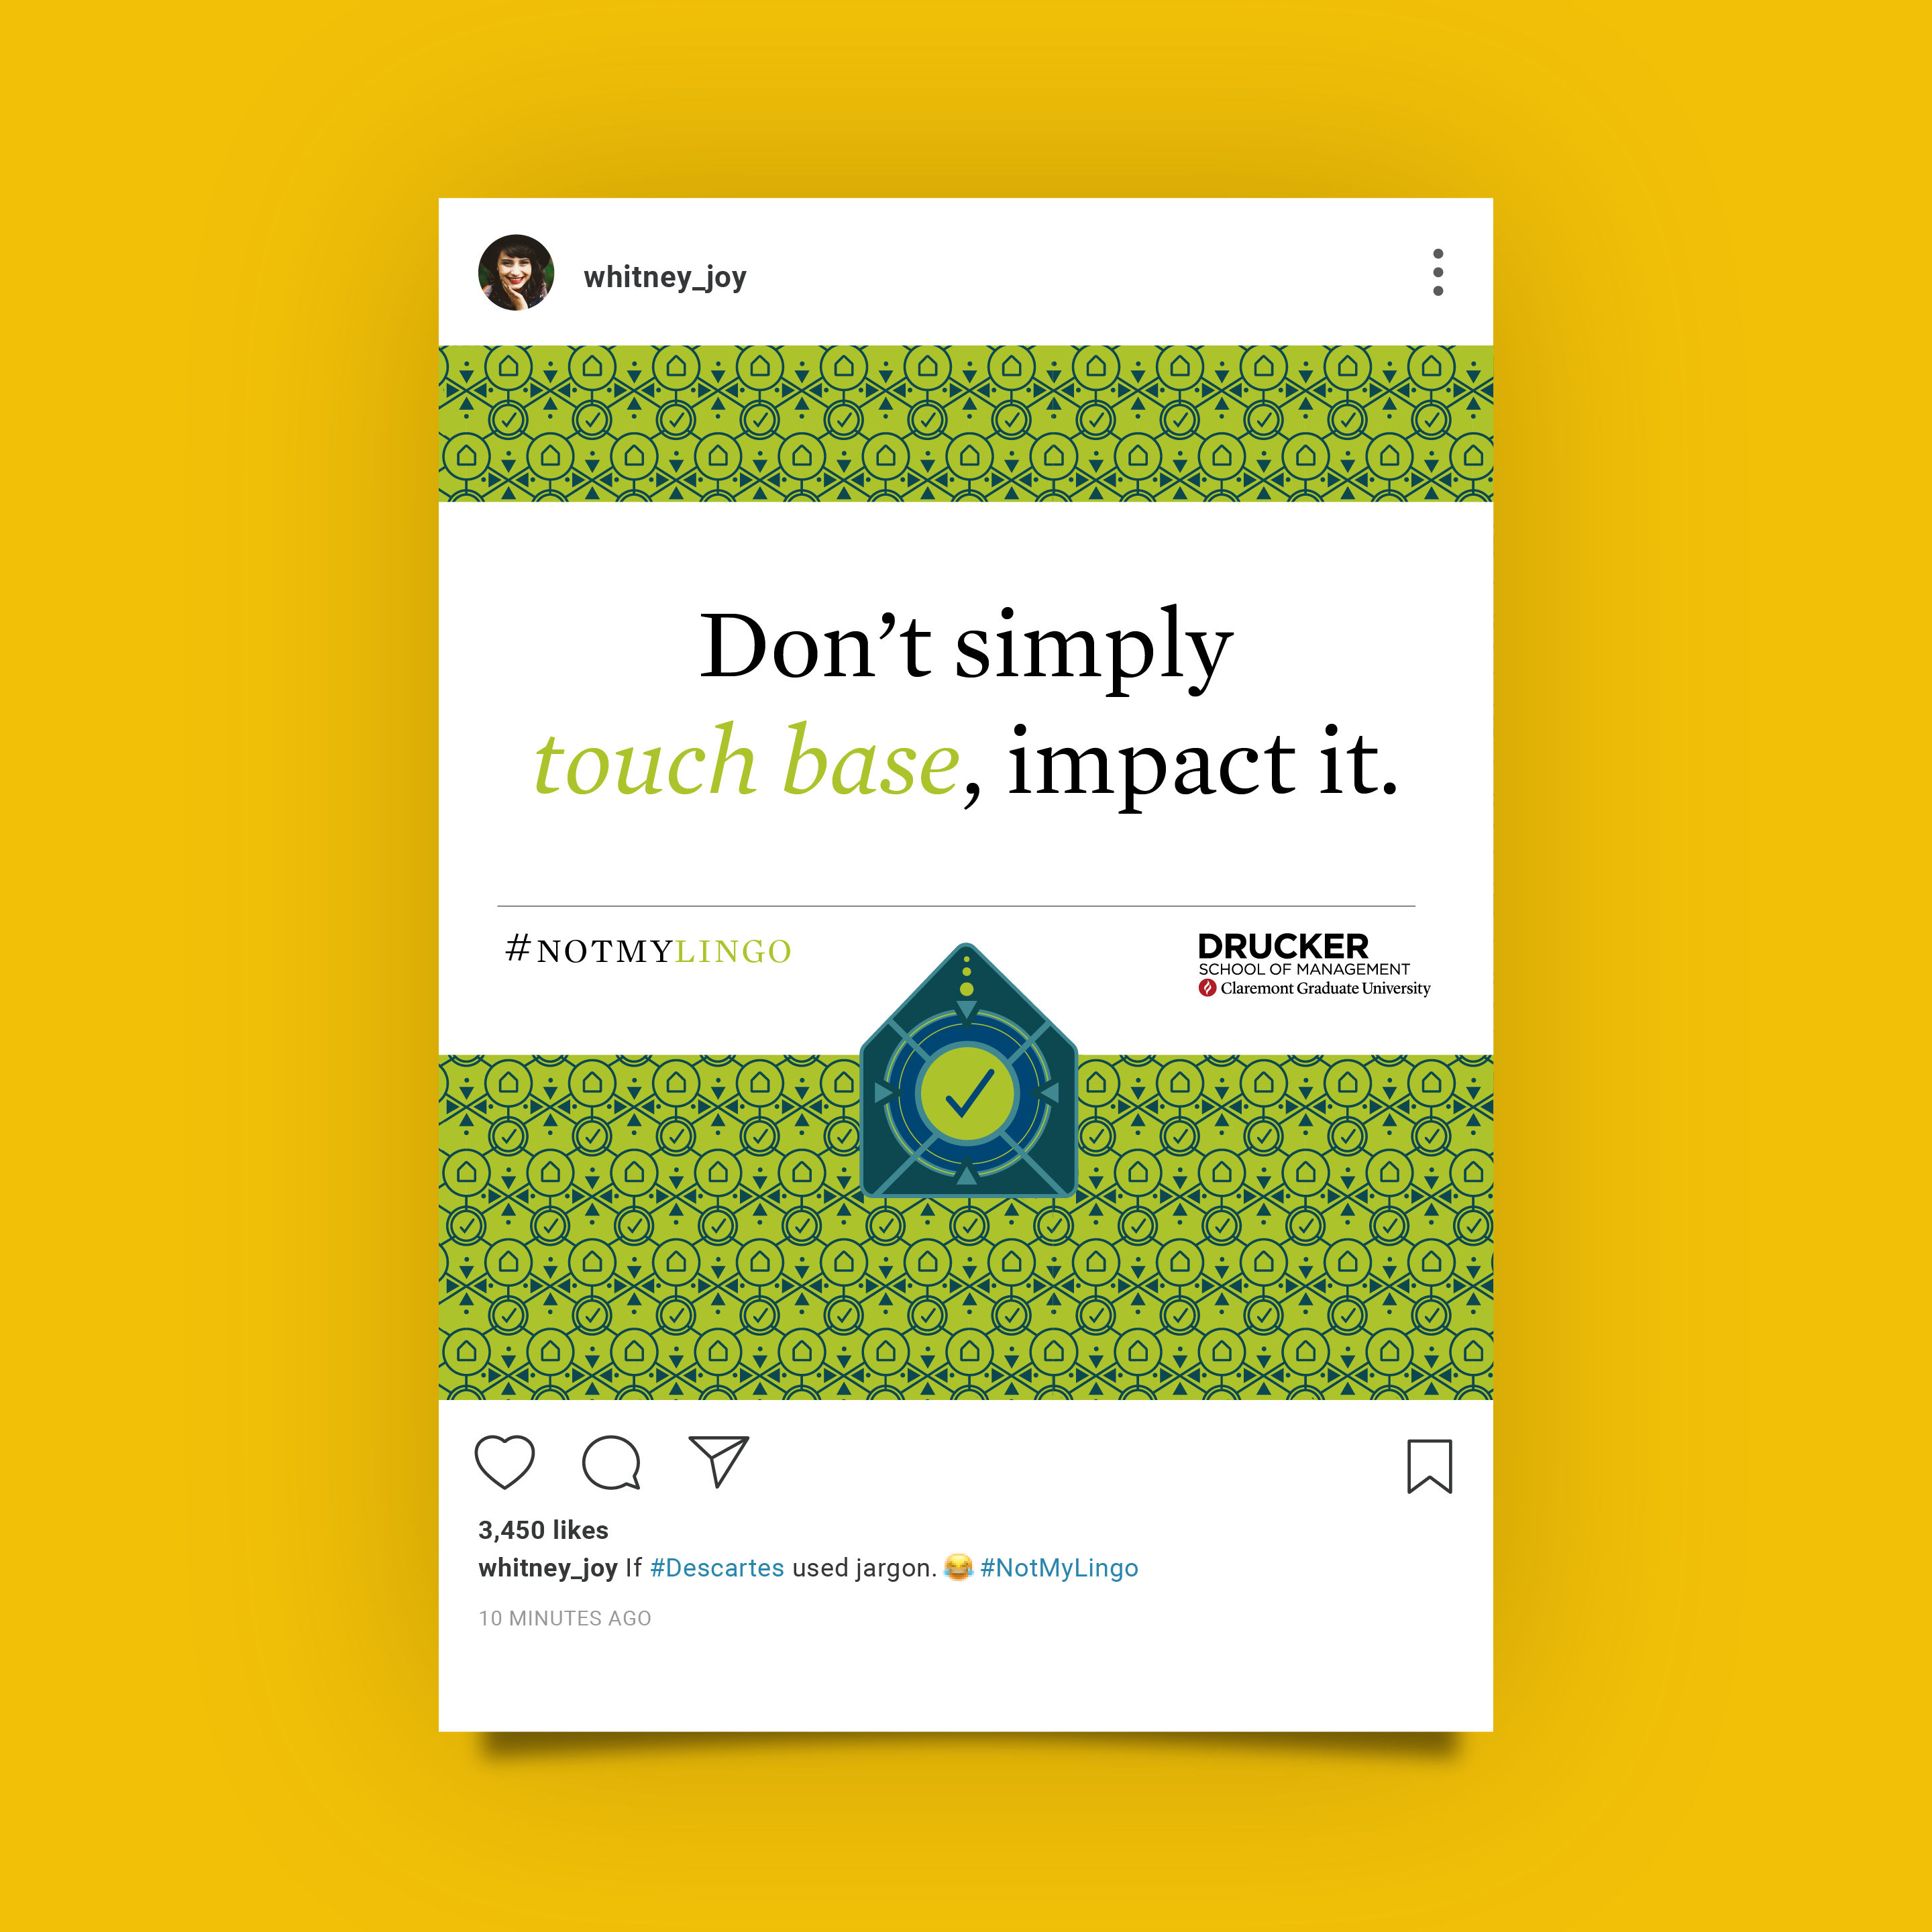 Drucker School of Management Instagram Post designed by Kilter